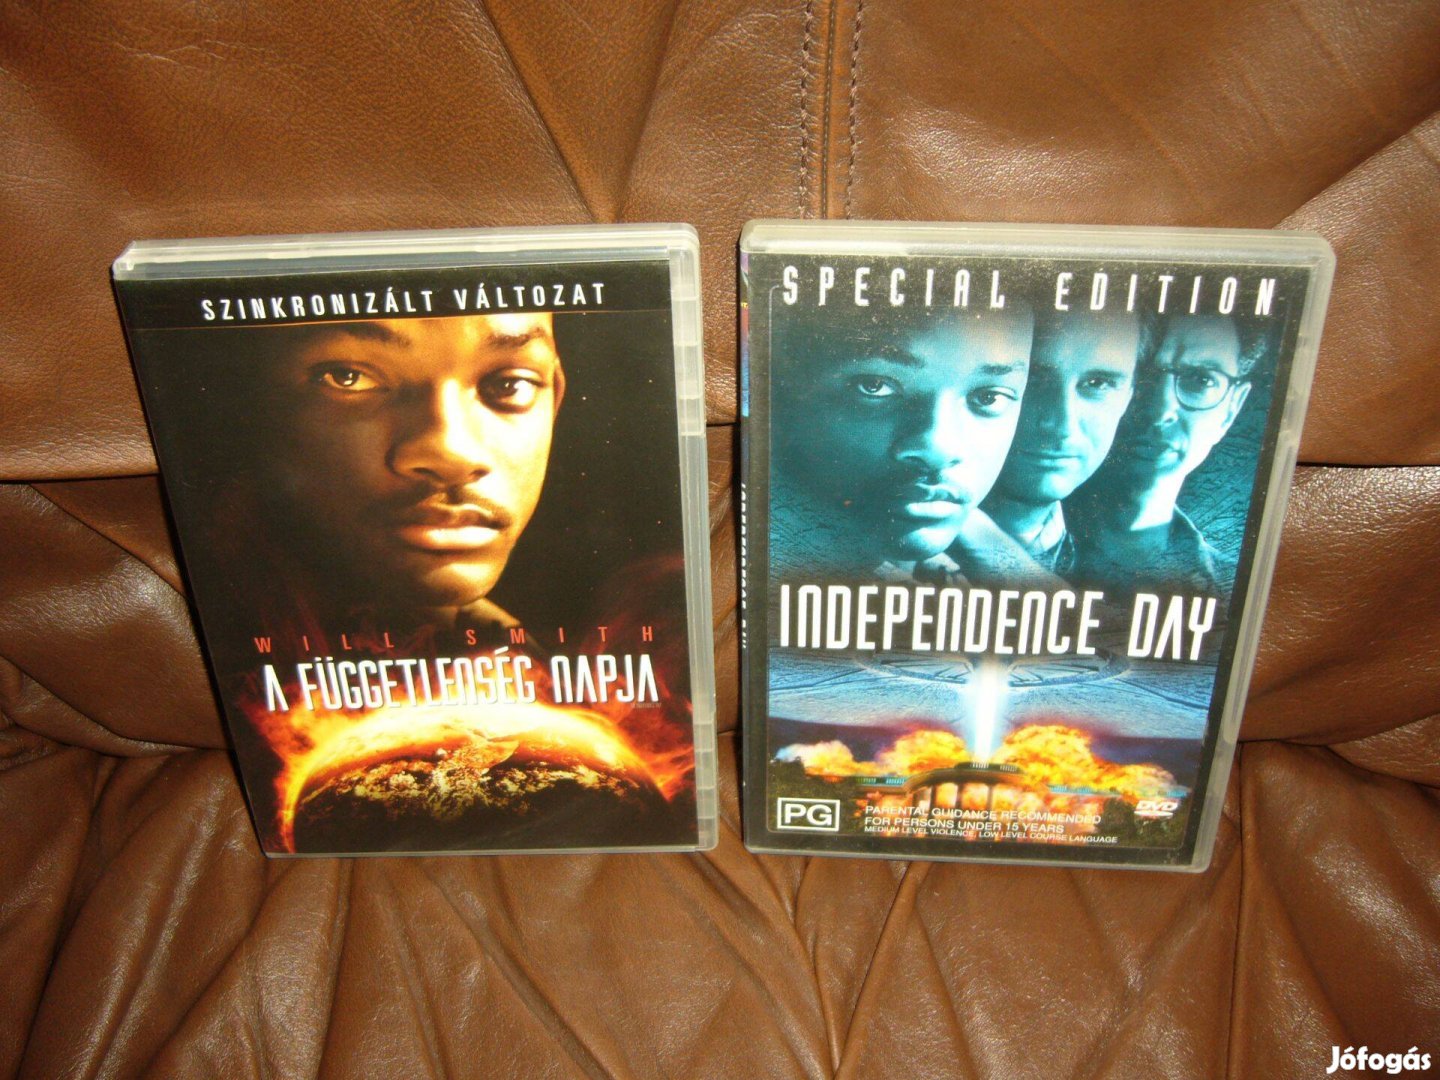 A függetlenség napja dvd filmek . Cserélhetők Blu-ray filmekre